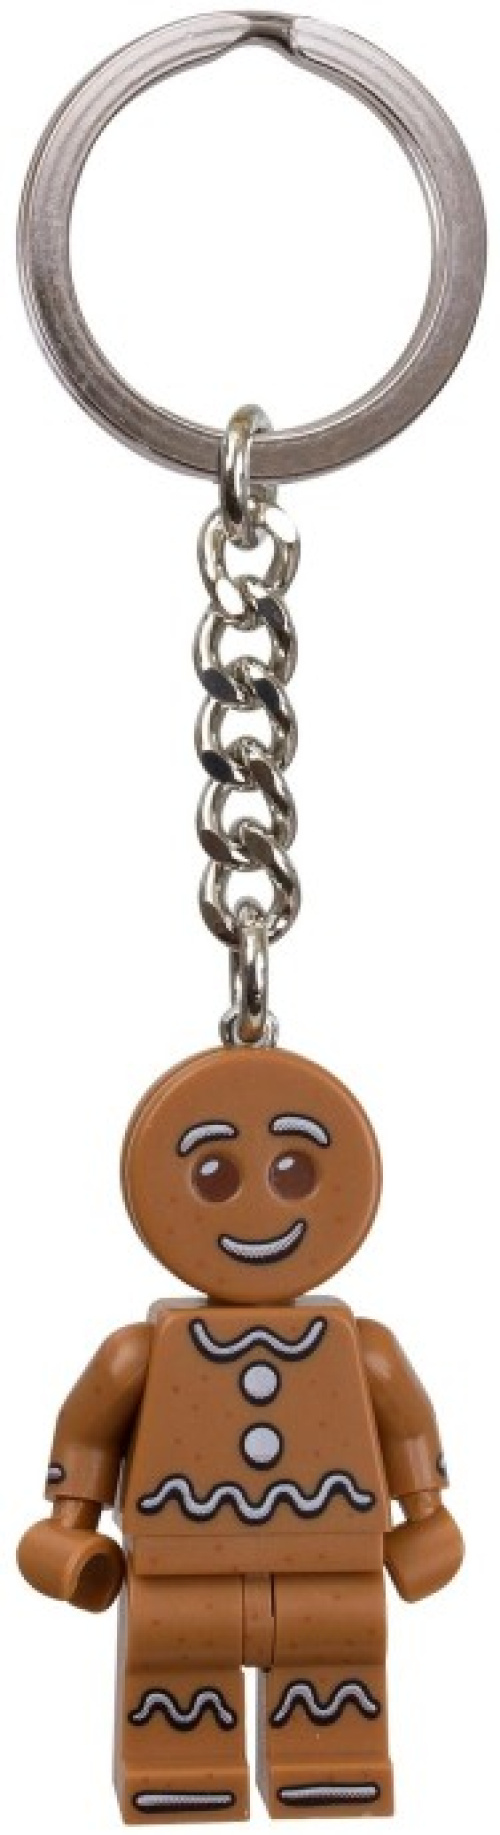 851394-1 Gingerbread Man Key Chain